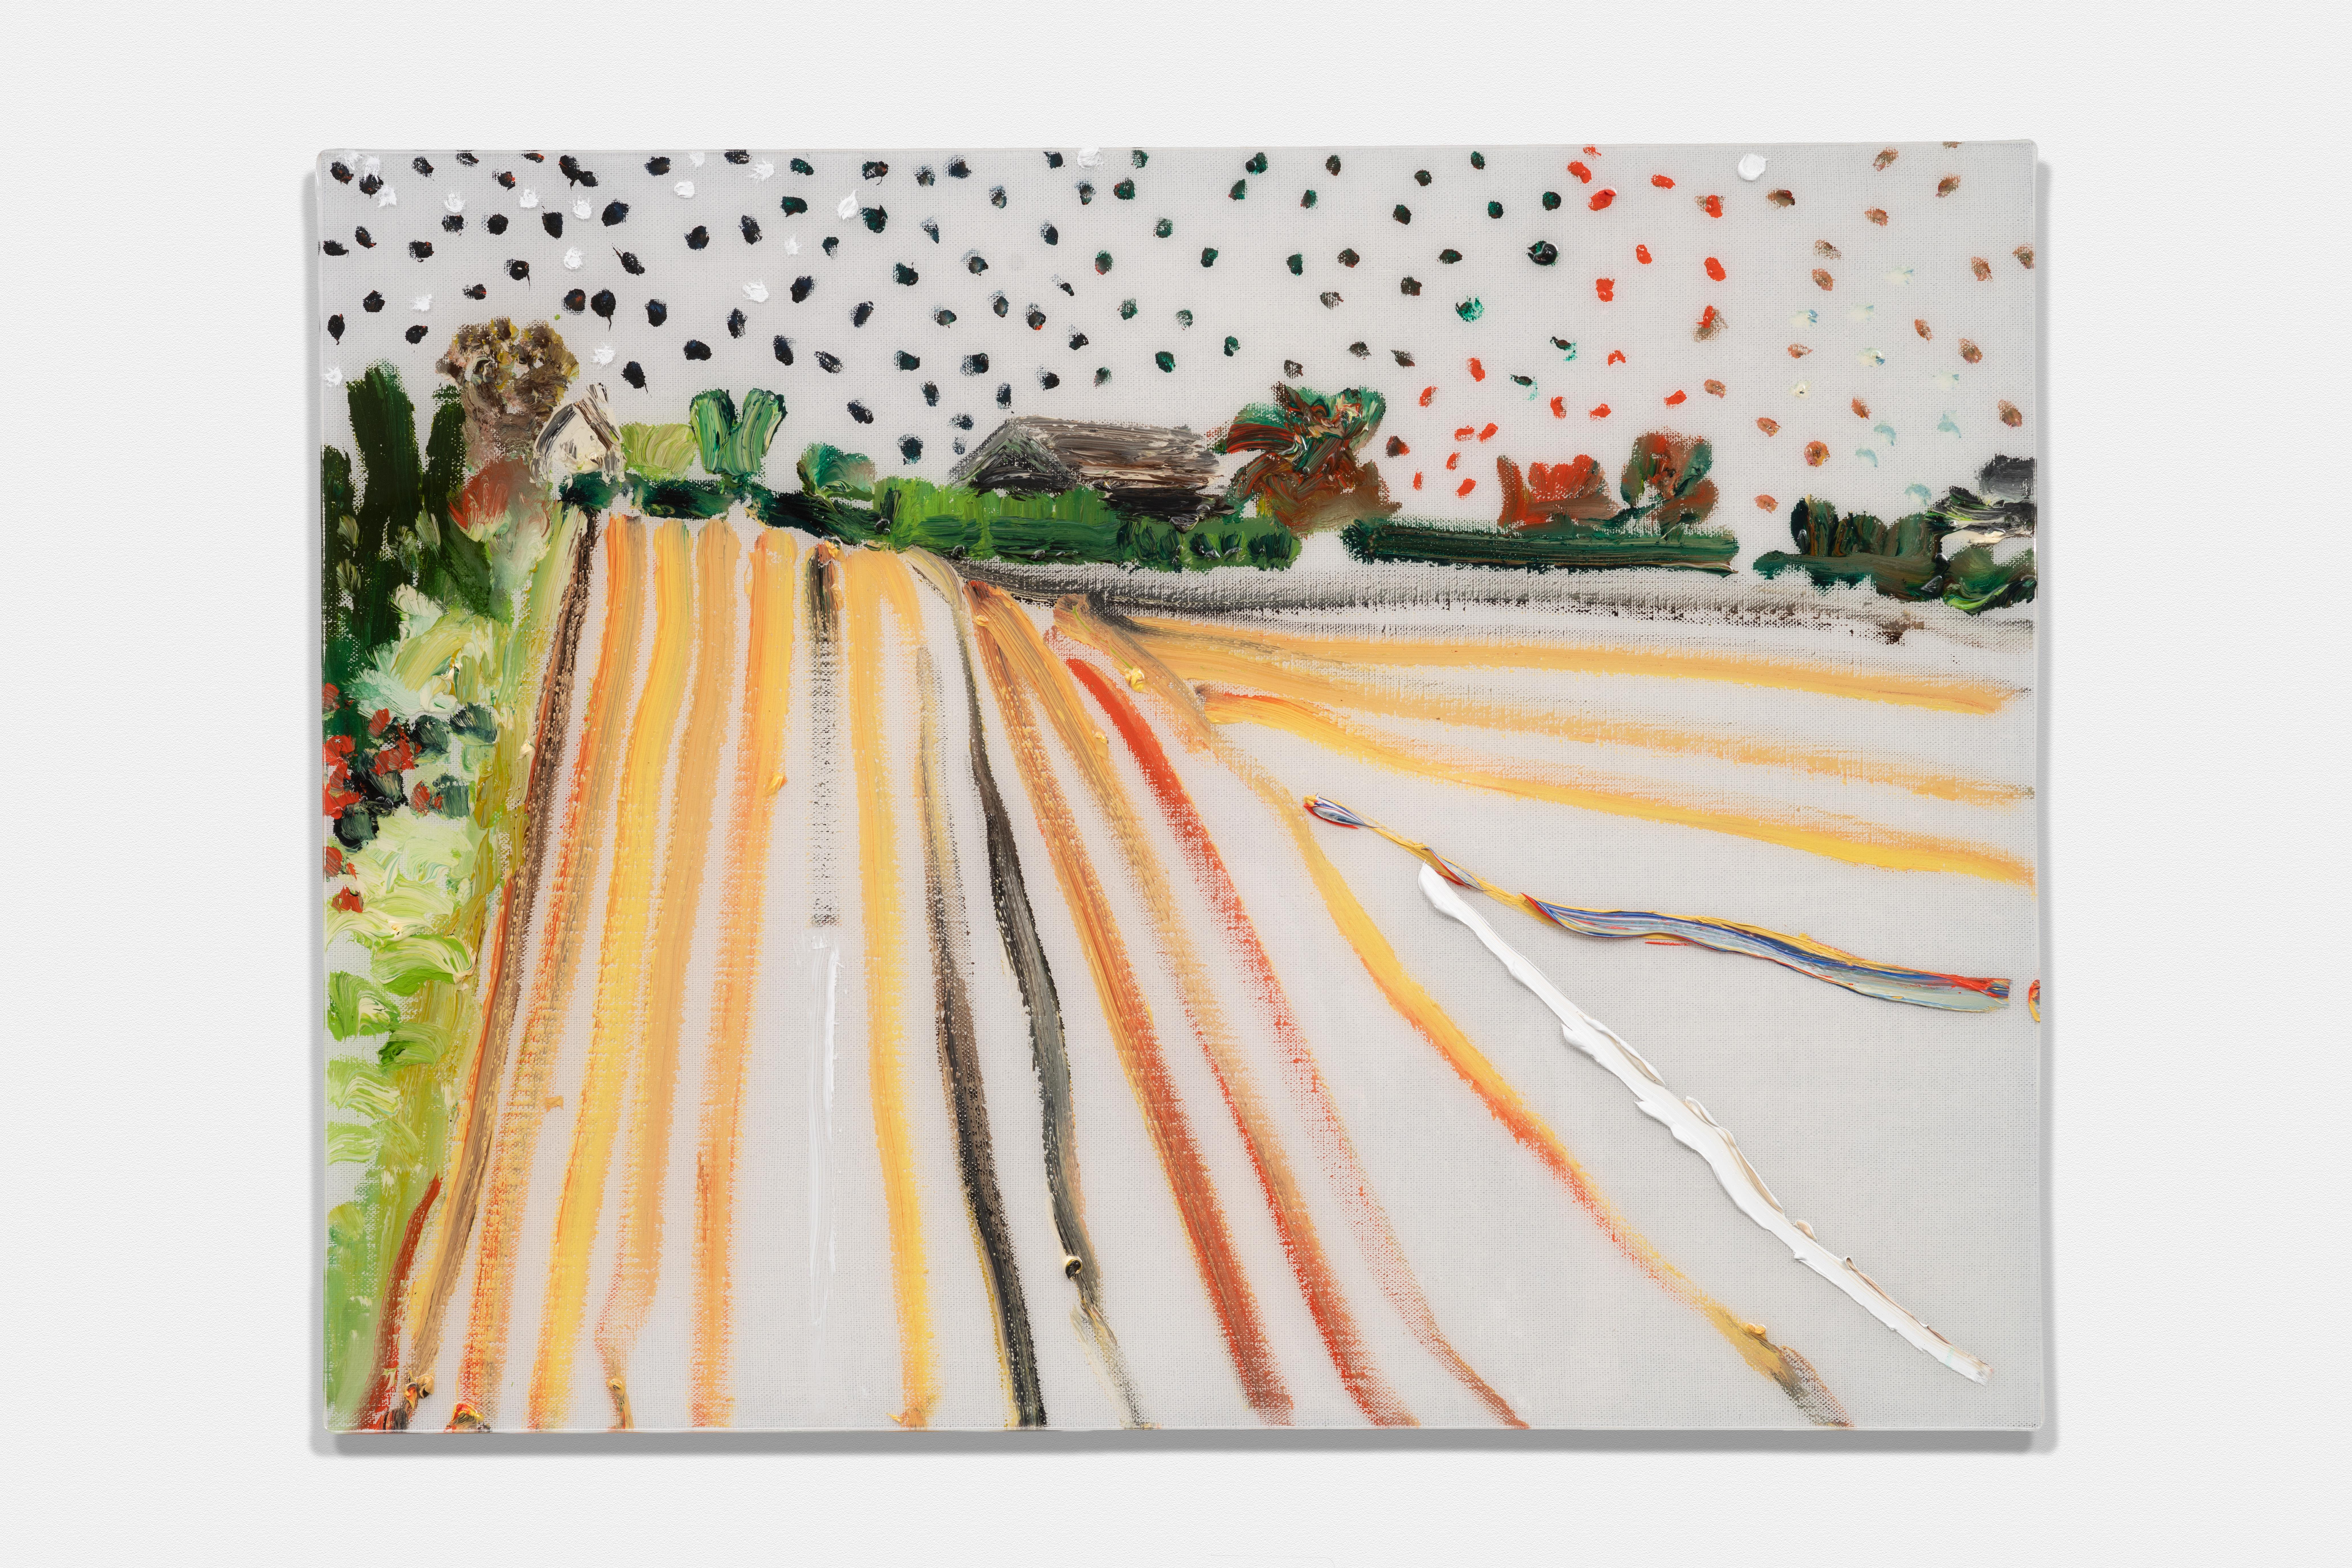 Darius Yektai Landscape Painting - "Daniels Lane" contemporary oil on resin painting colorful modern farm landscape